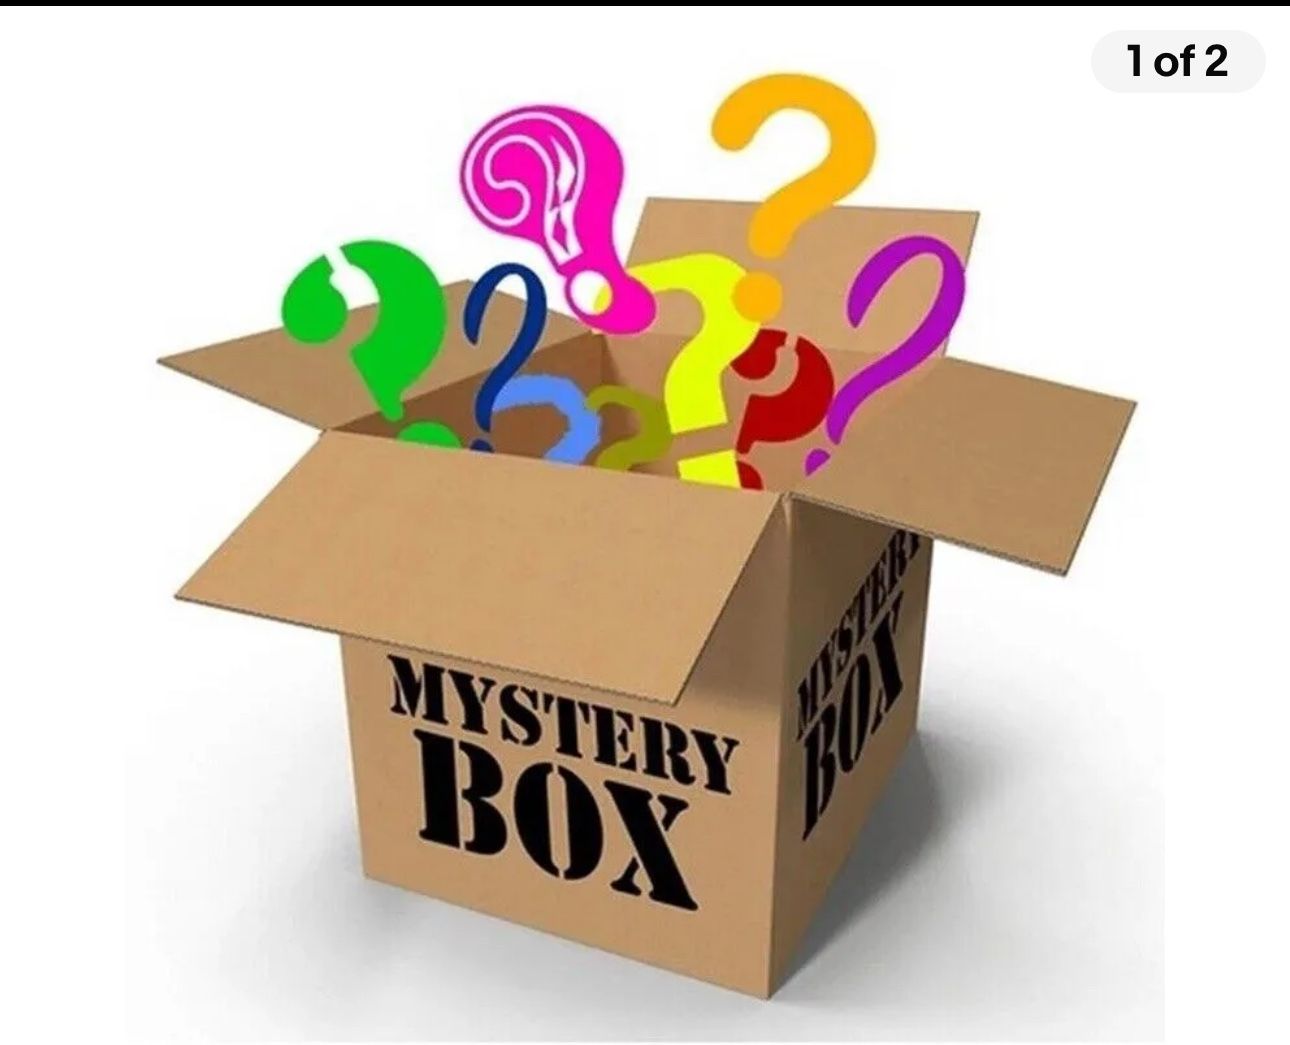 Buy 5 Get 1 Free DVD Mystery Box